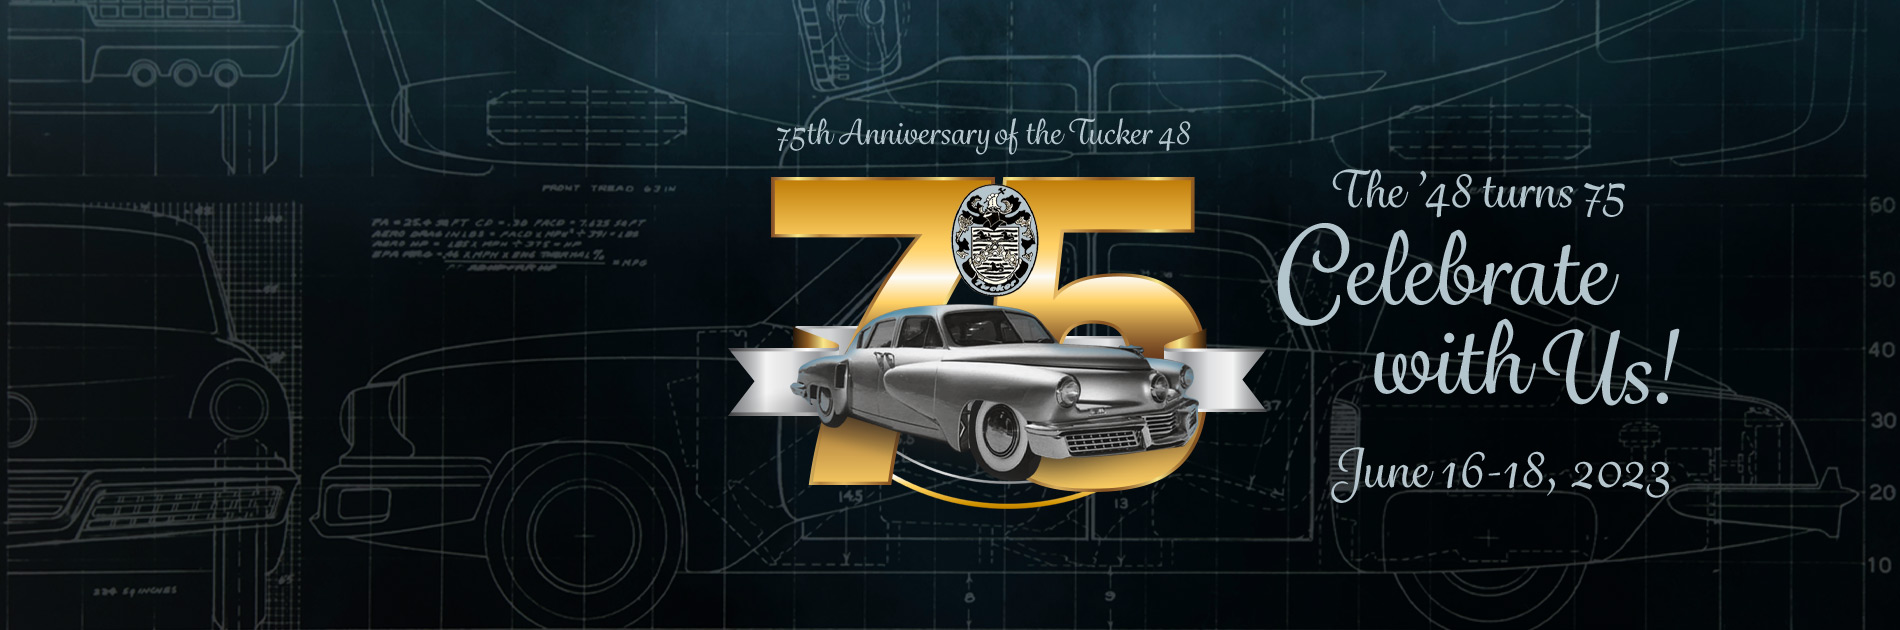 Tucker '48 75th Anniversary Celebration